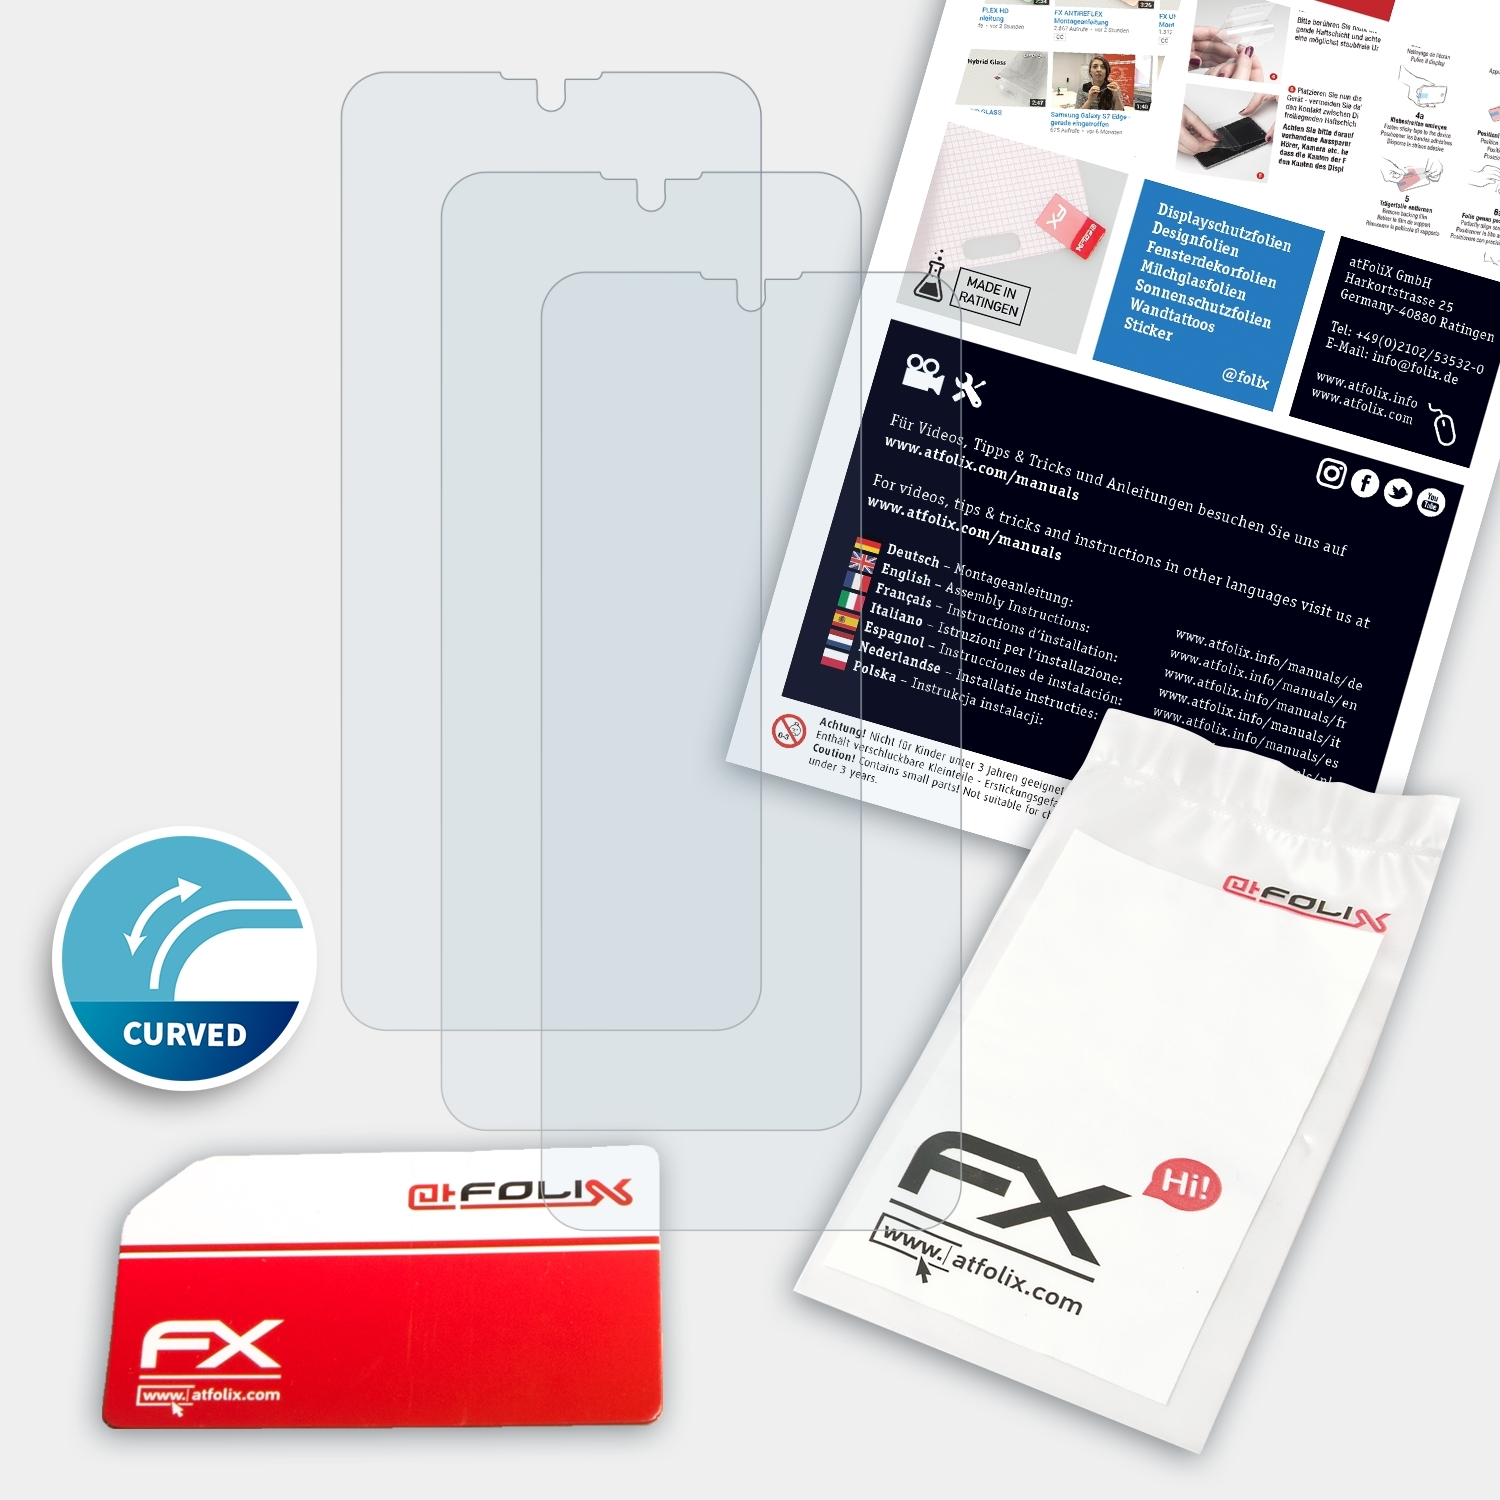 ATFOLIX 3x FX-ActiFleX Displayschutz(für U10) Power Wiko